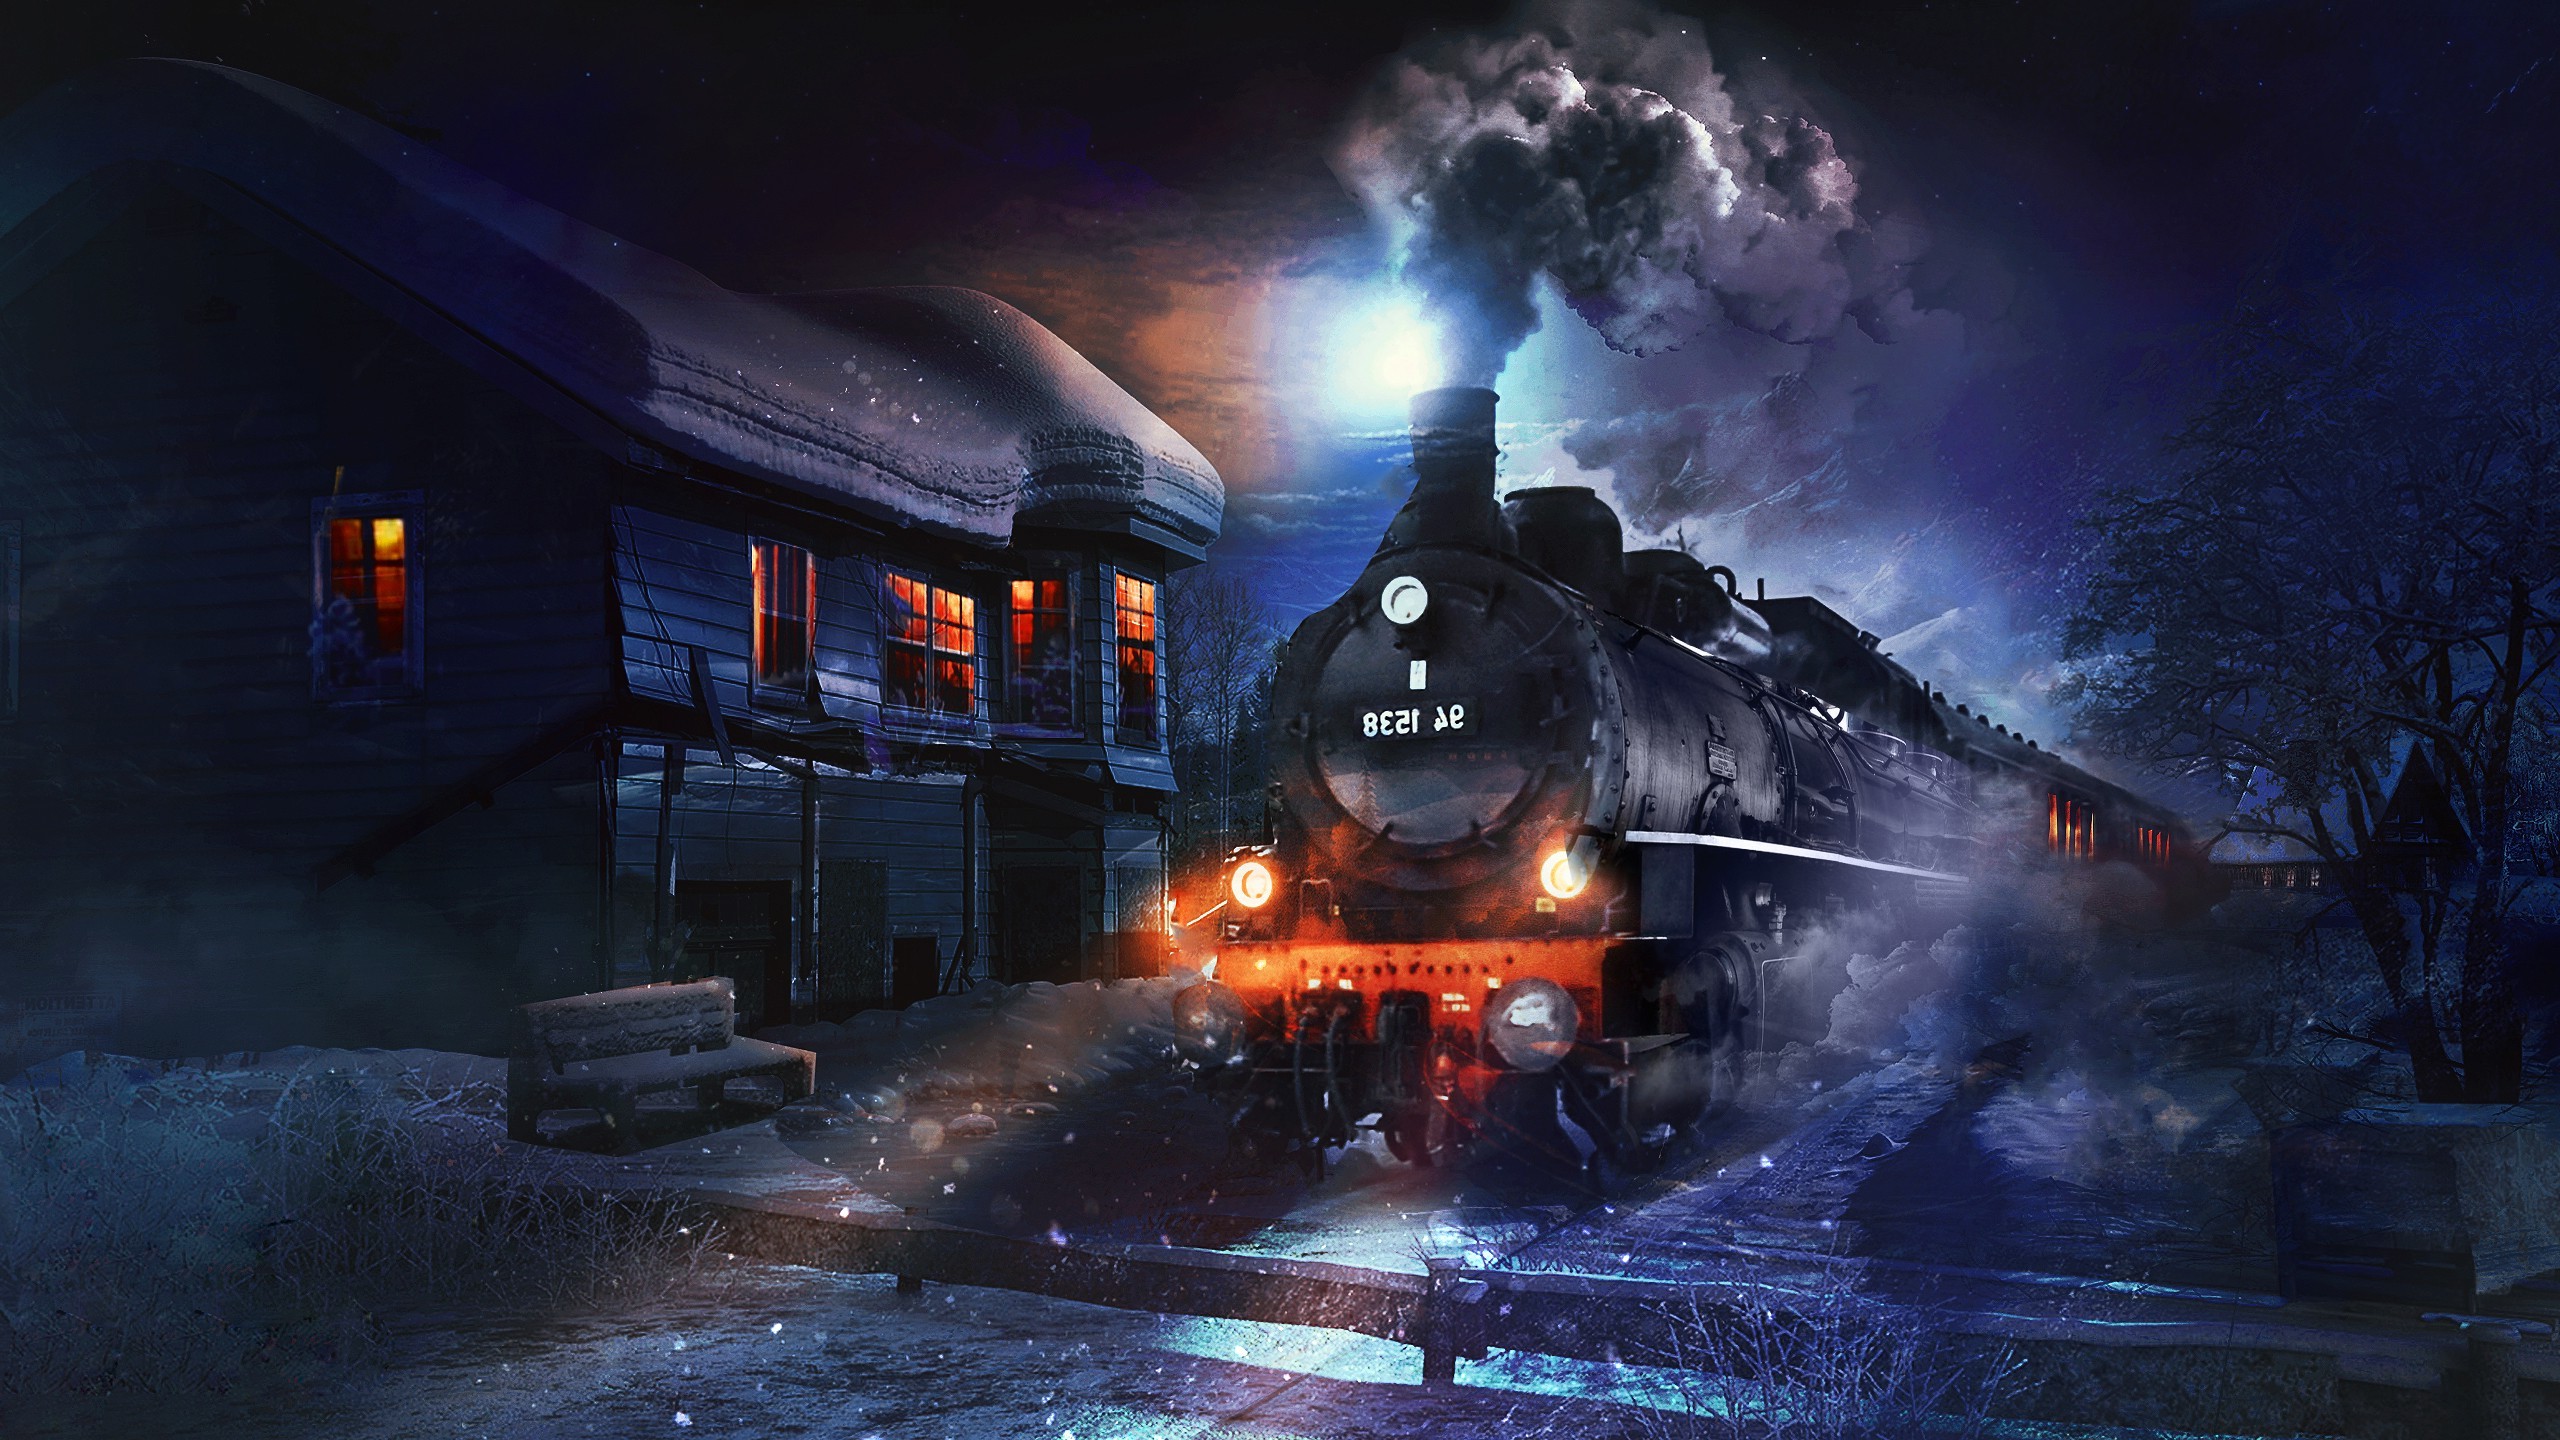 fantasy Art, Artwork, Digital Art, Steam Locomotive, Train, House